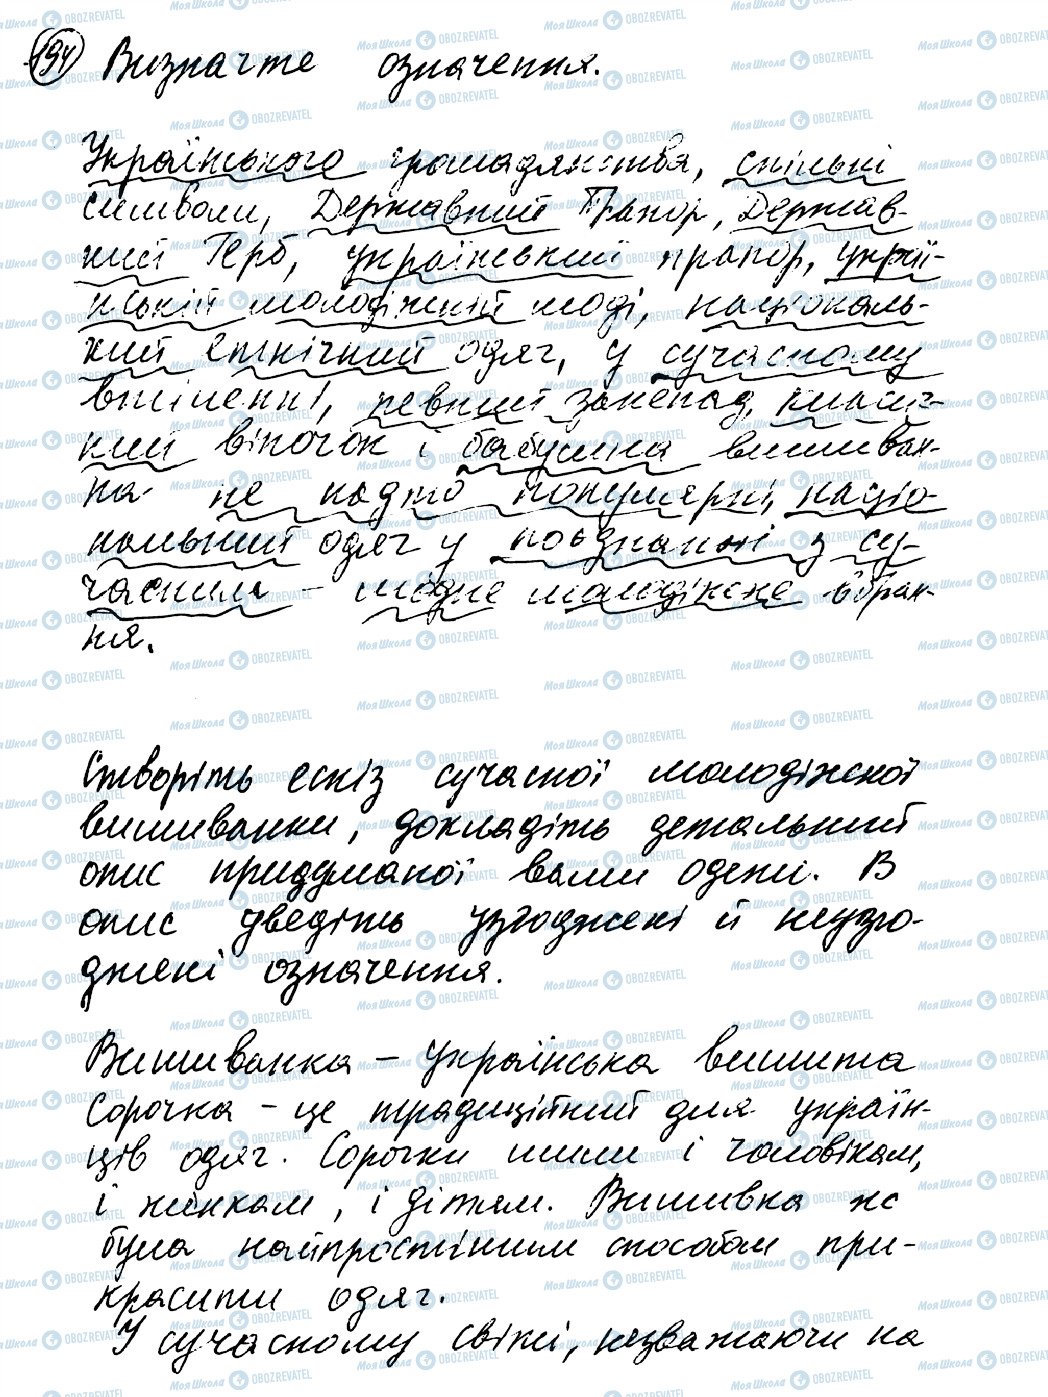 ГДЗ Укр мова 8 класс страница 194